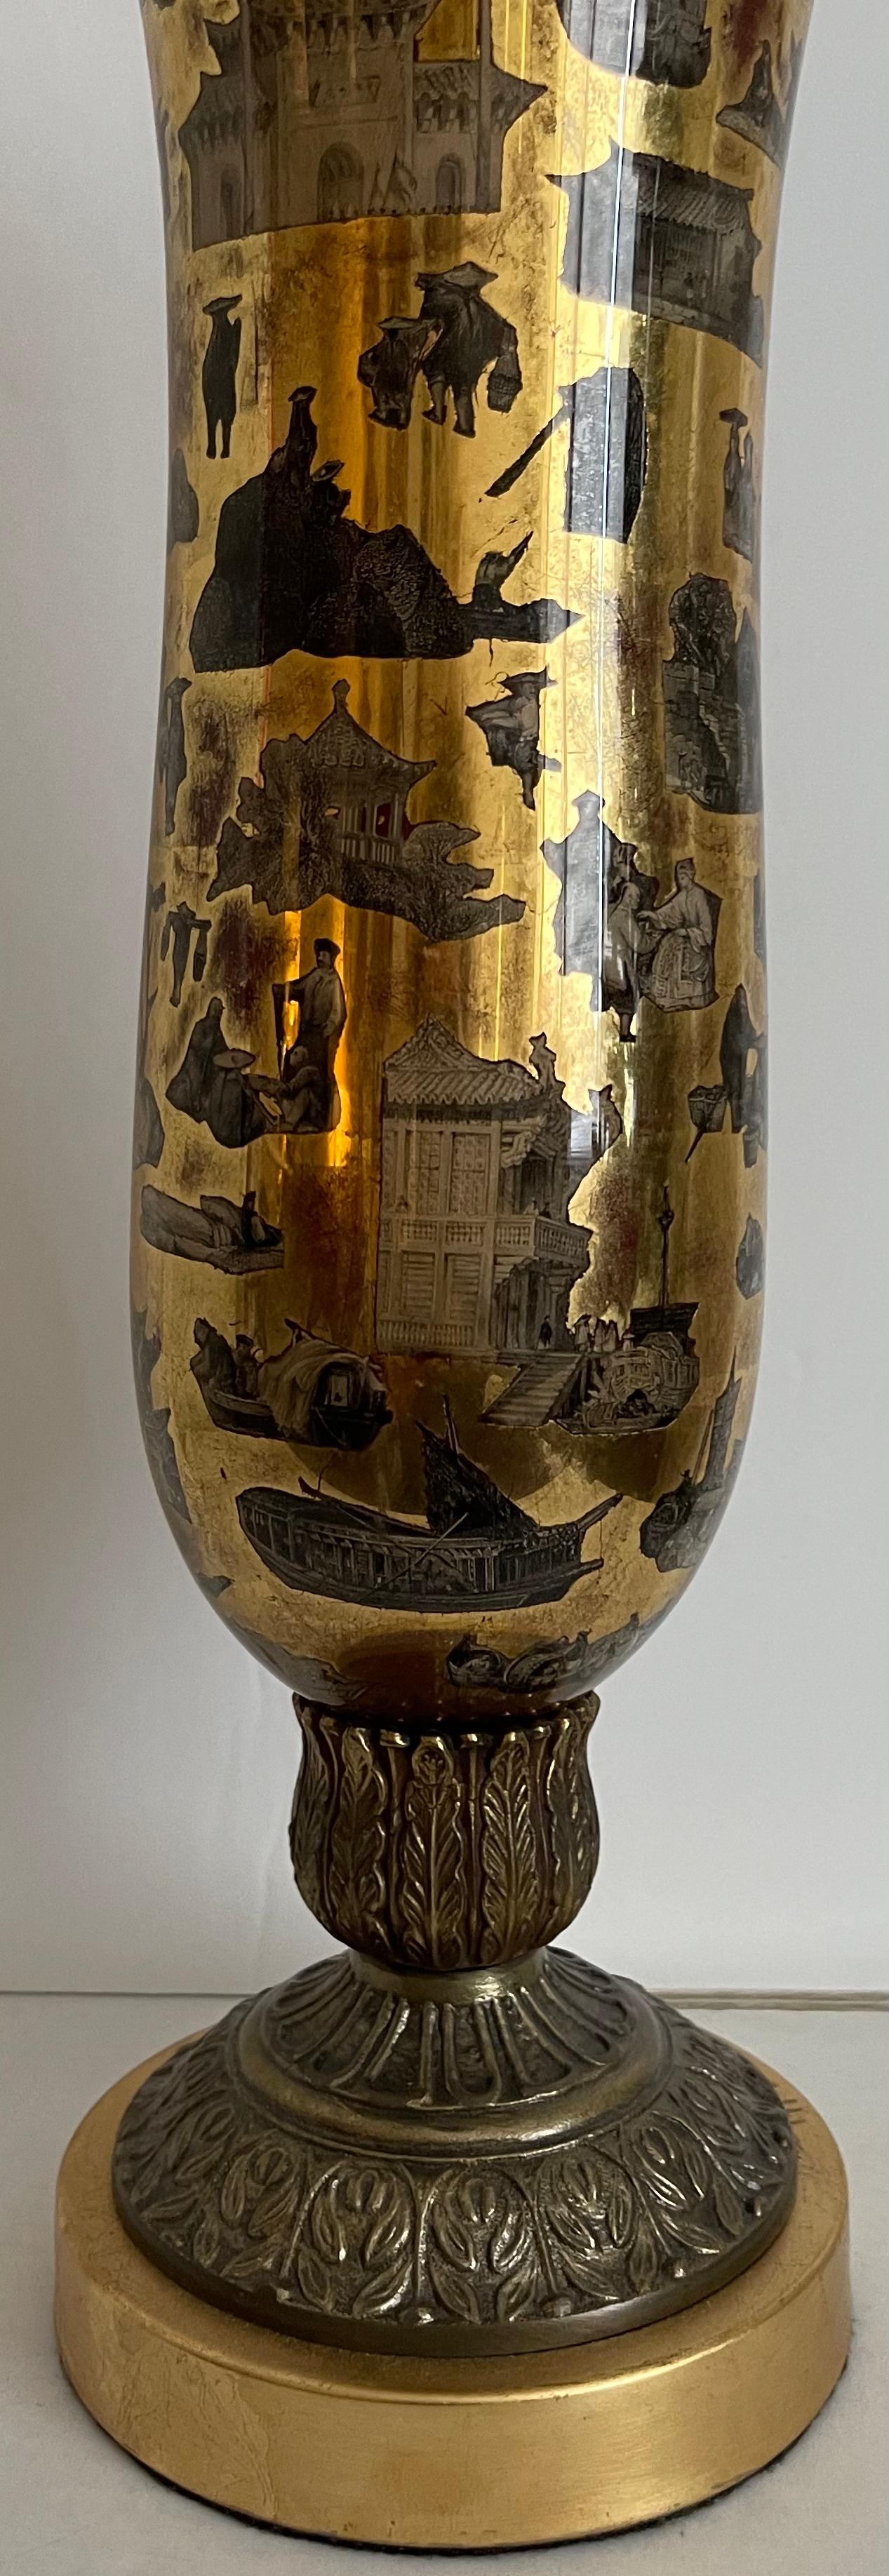 Chinoiserie Decalcomania-Tischlampe, Gold, 1930er Jahre (Messing) im Angebot